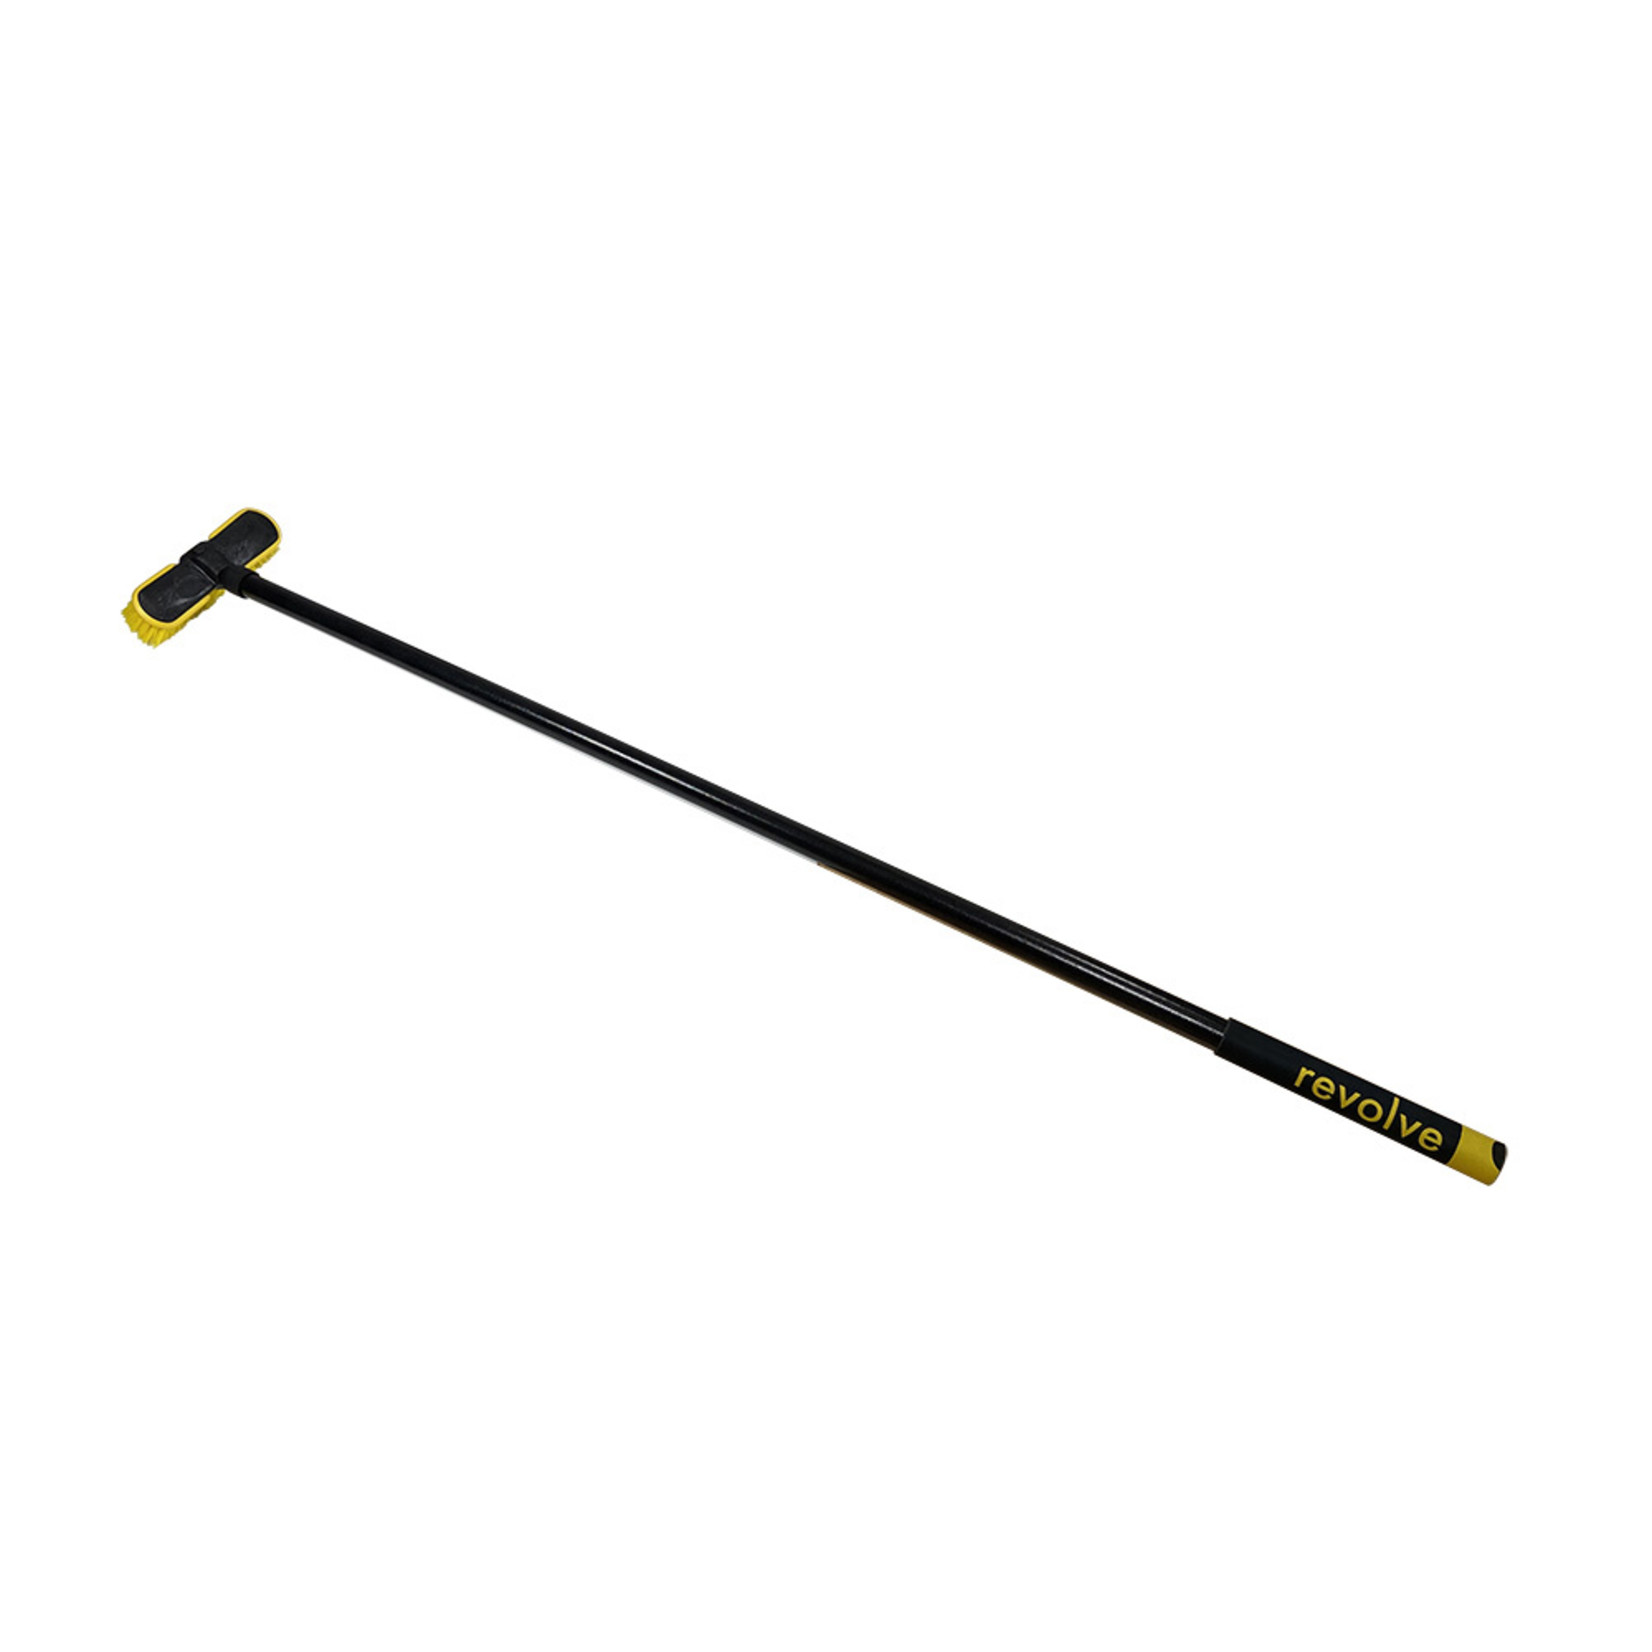 Revolve Stiff brush accessory for the rollable composite pole